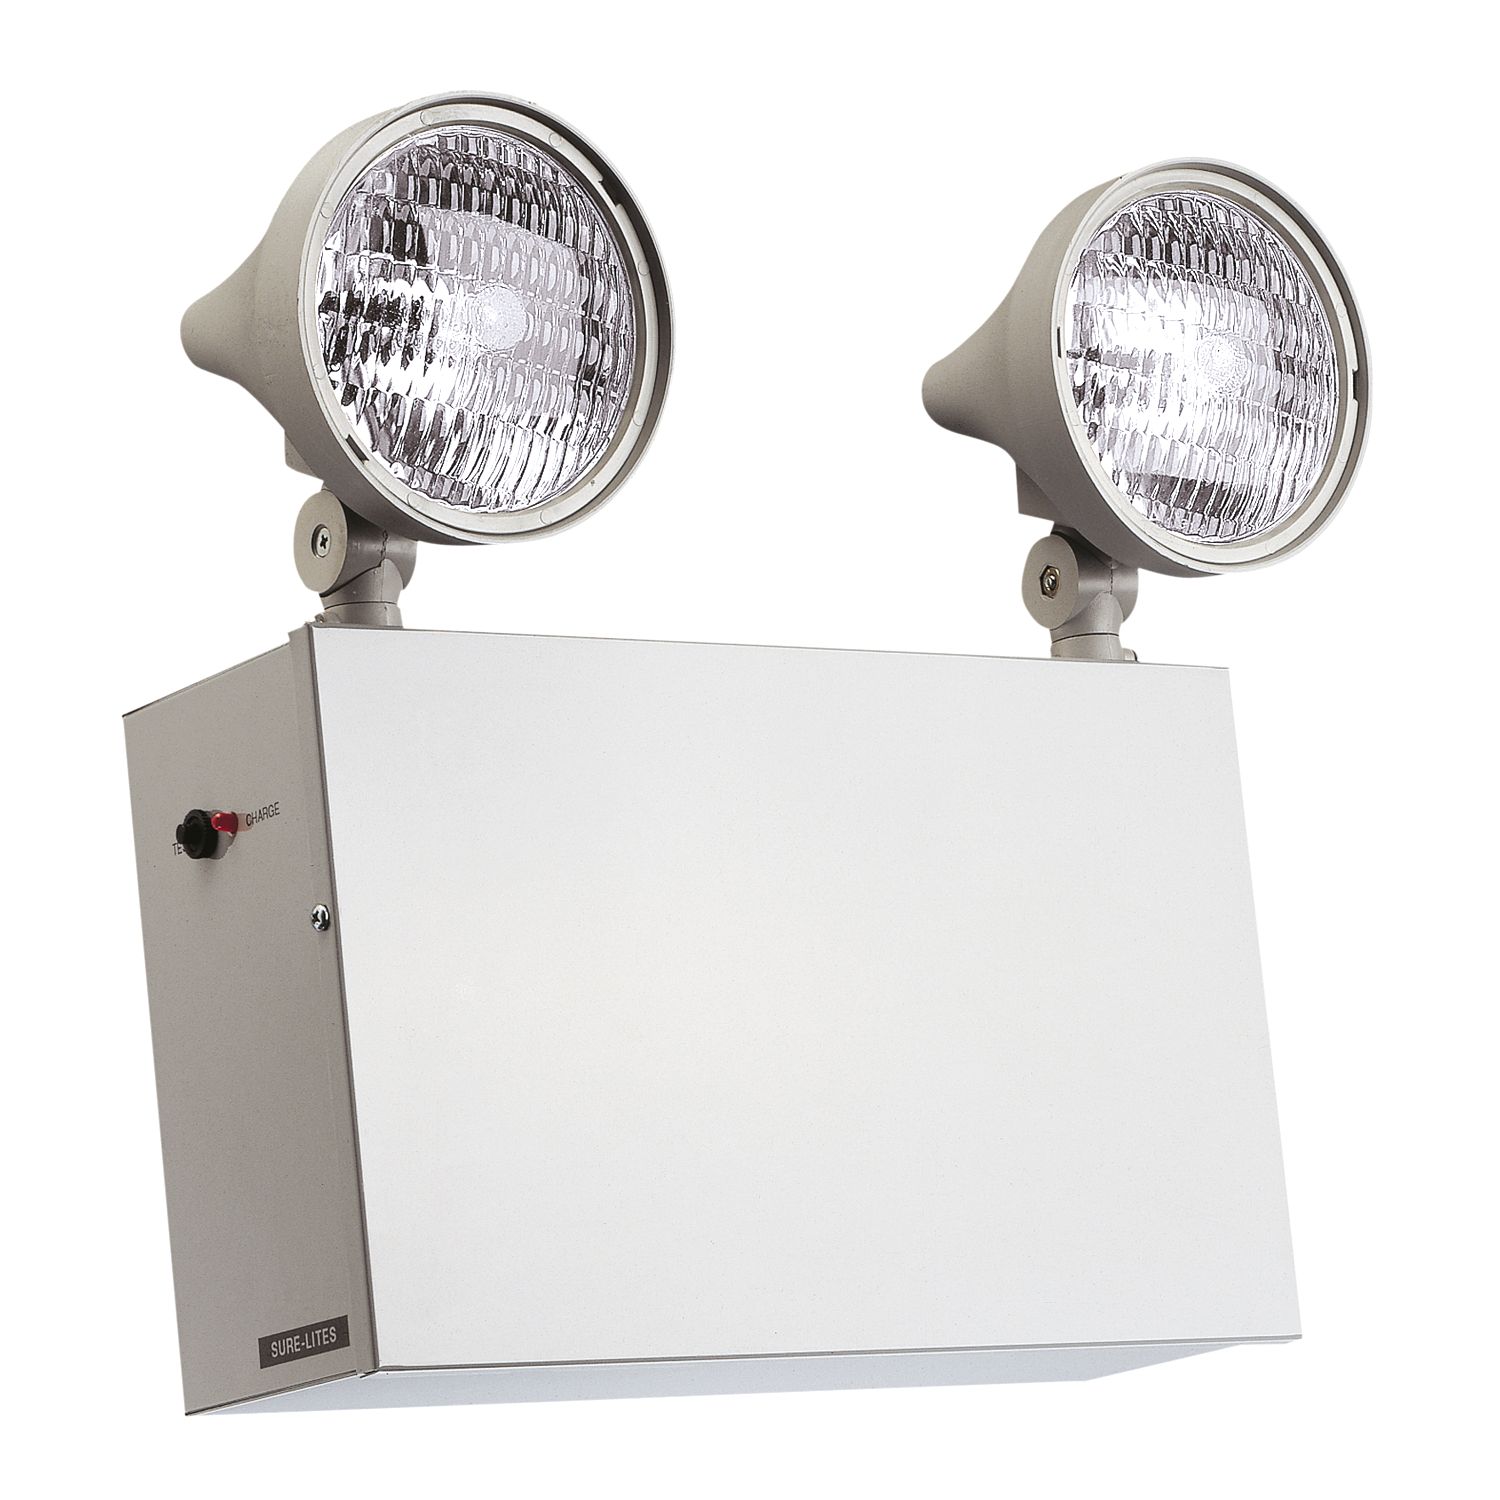 Emergency lighting - Eurolite - Cooper Lighting and Safety - LED